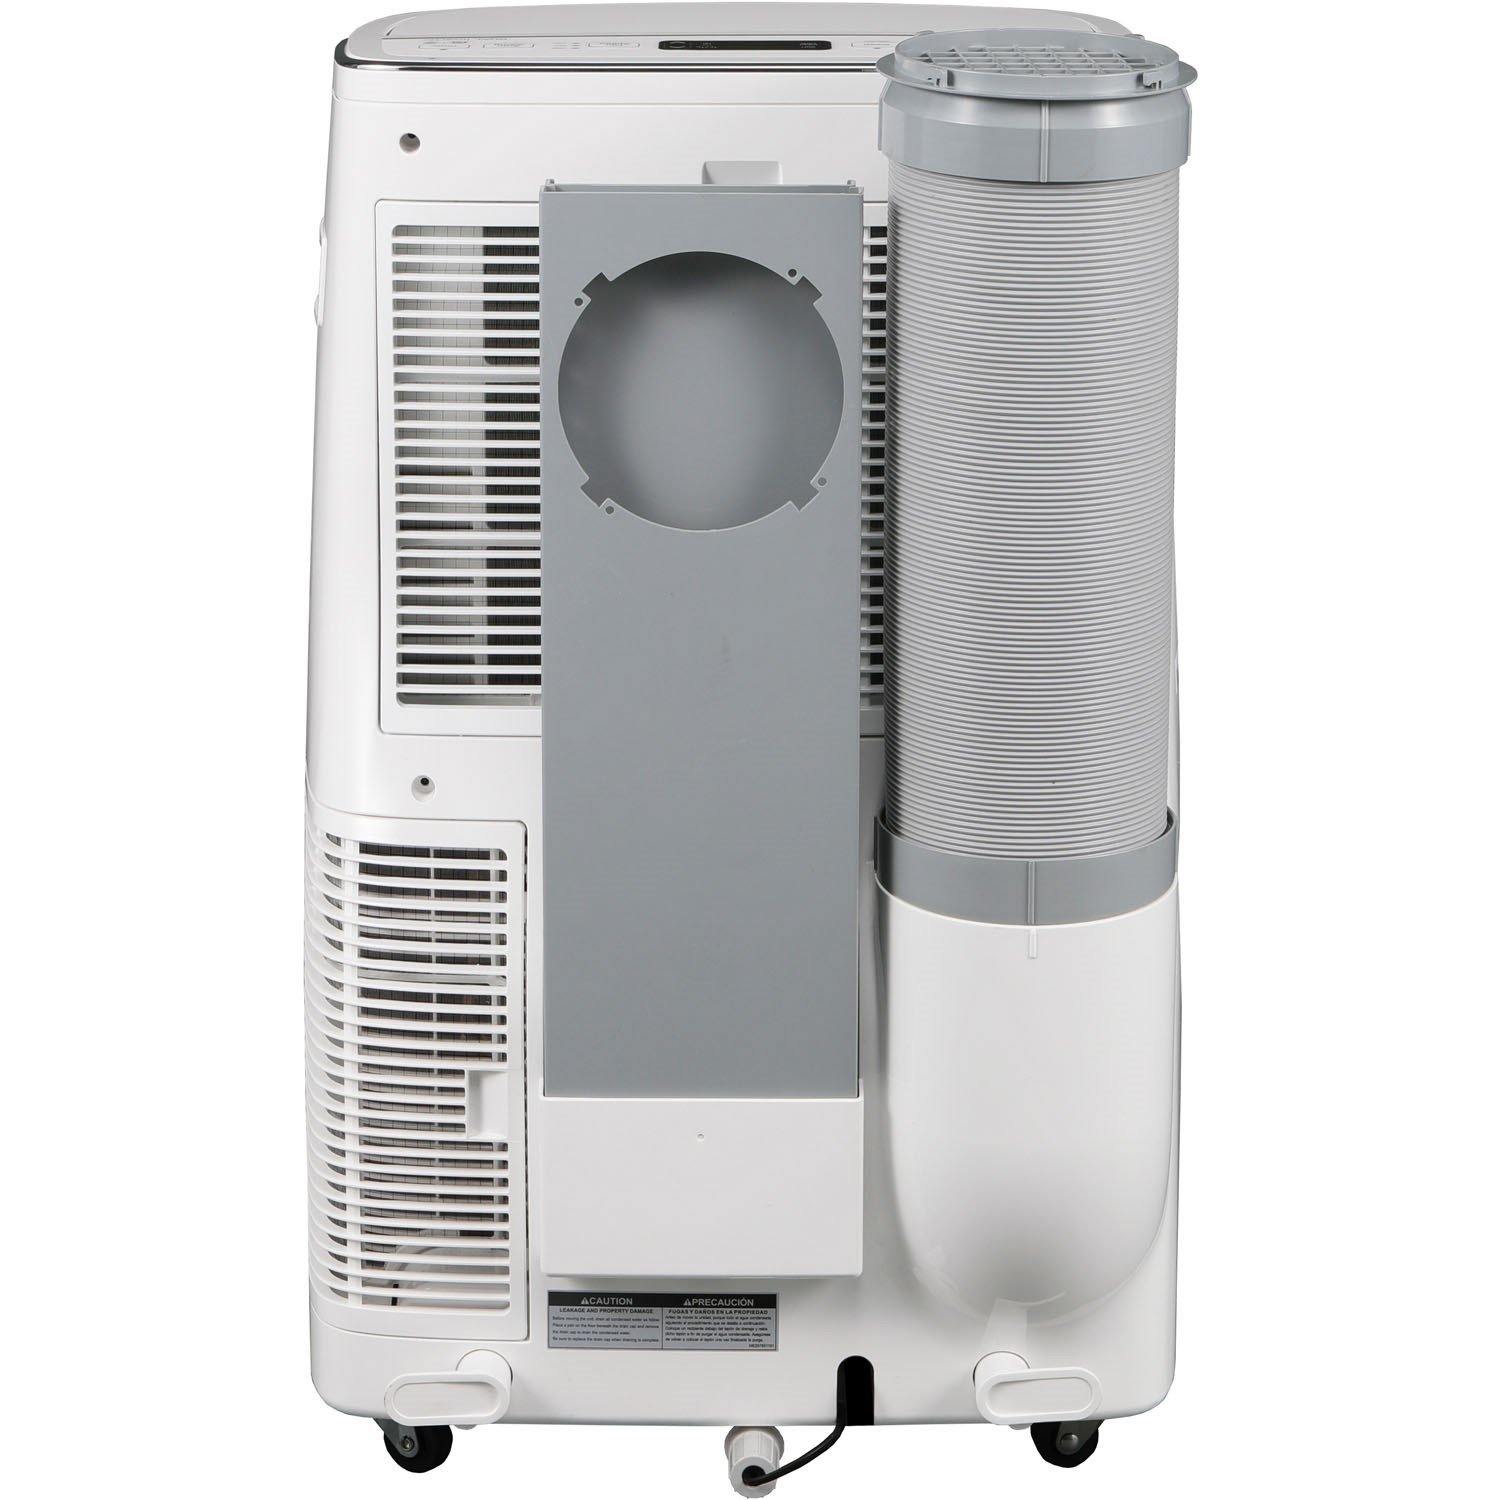 LG Portable A/C LG® - 14,000 BTU Portable Air Conditioner